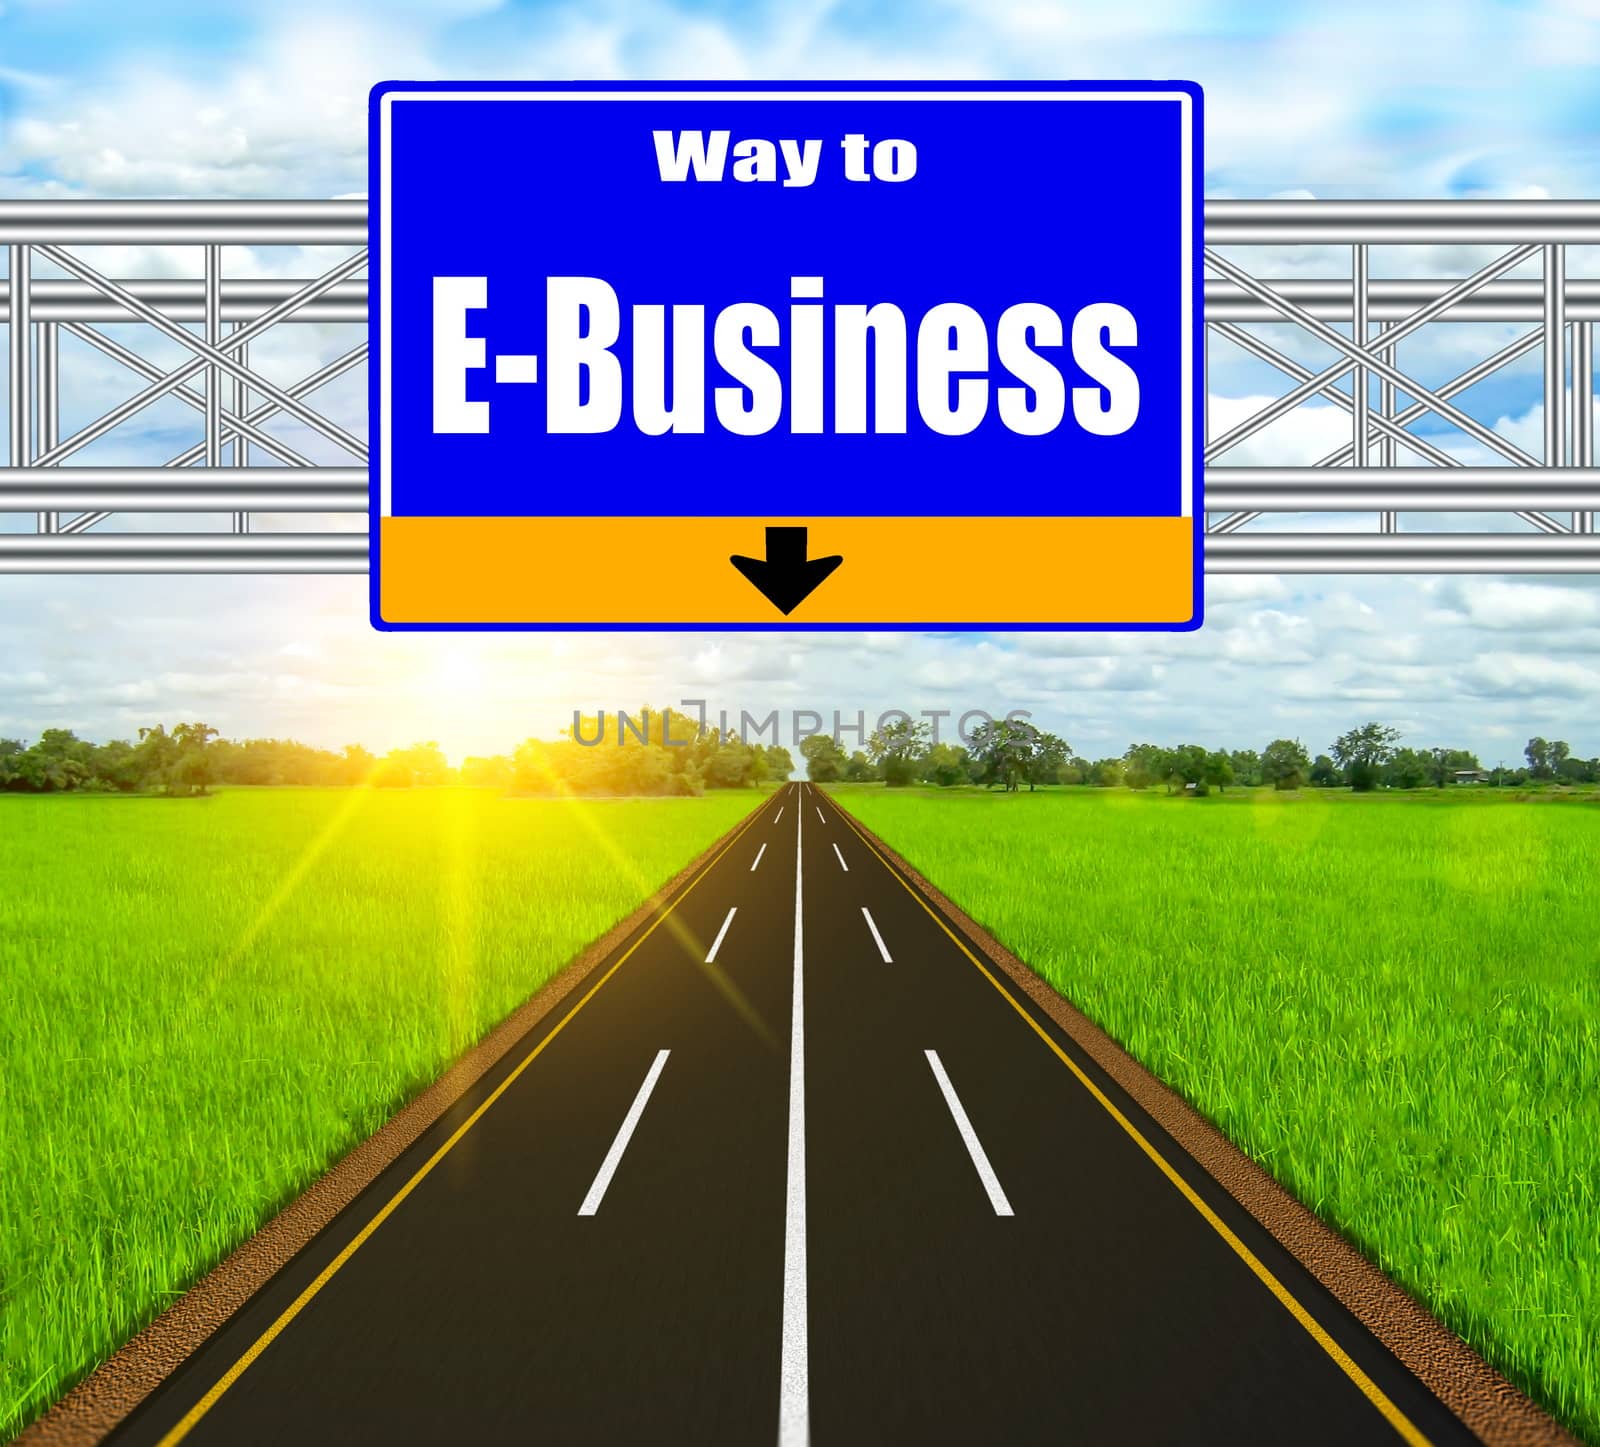 Blue Road Sign concept E-Business and soft natural landscape background.